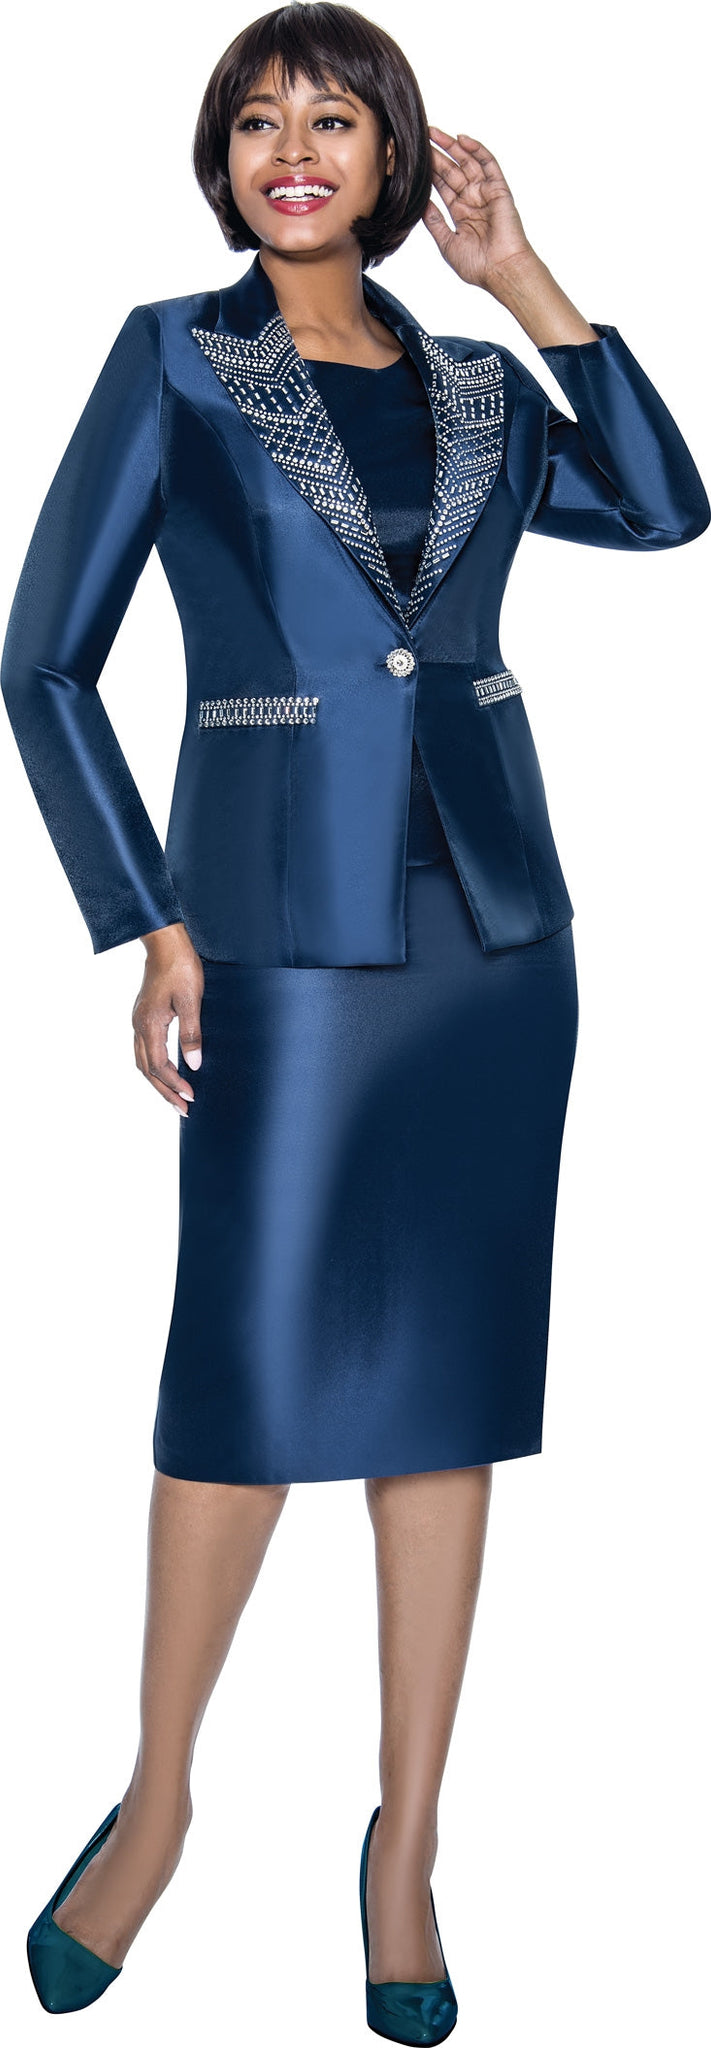 Terramina Church Suit 7023C-Navy - Church Suits For Less